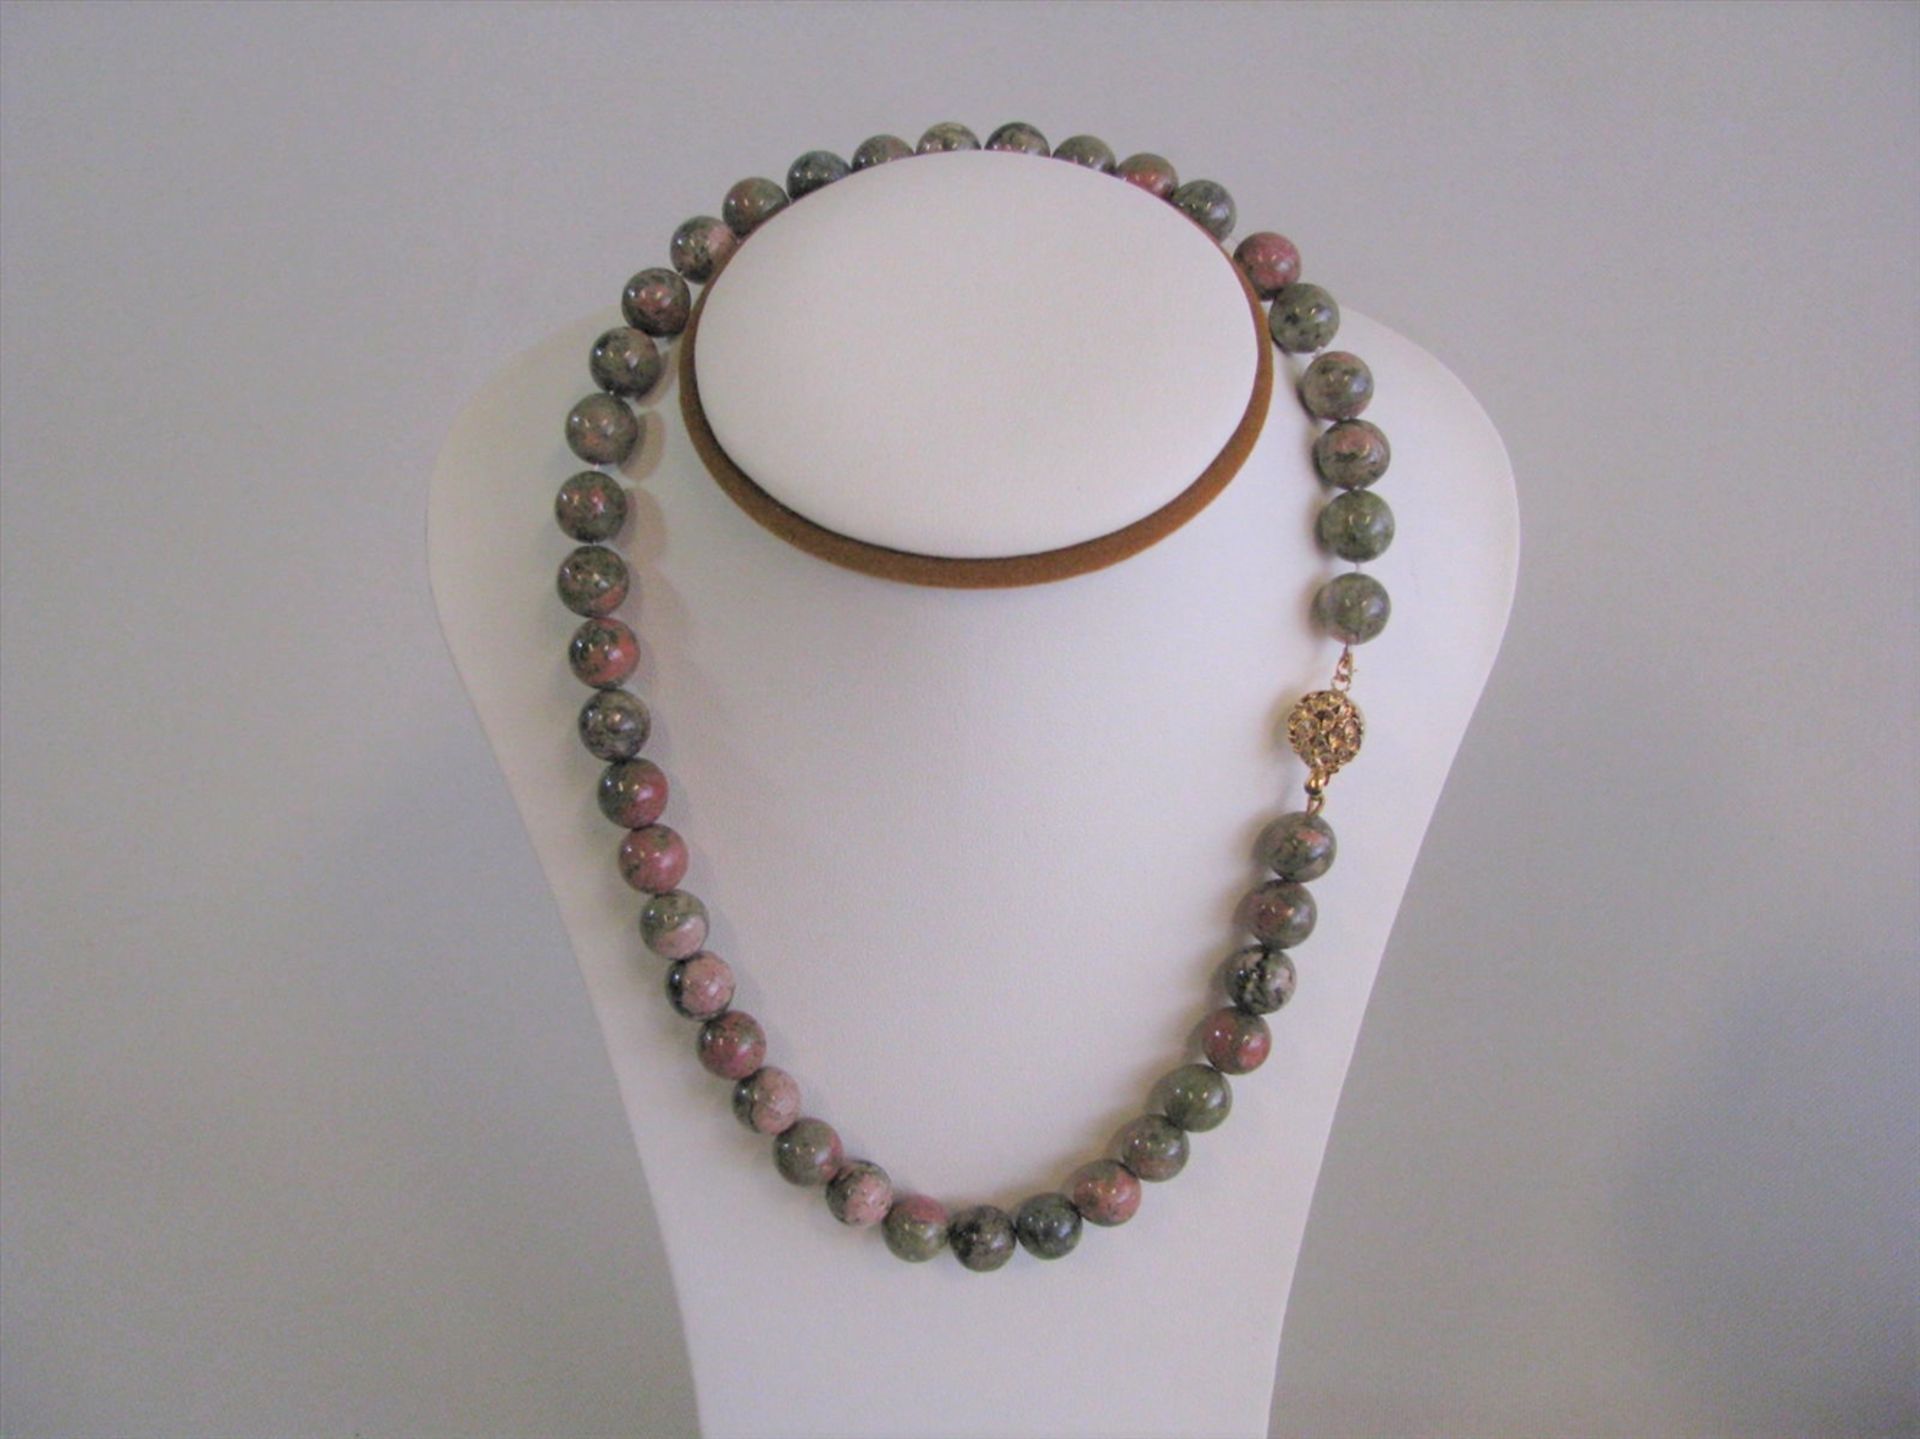 Unakit-Perlenkette, vergoldete Schließe, l 44 cm, d 1 cm.- - -19.00 % buyer's premium on the